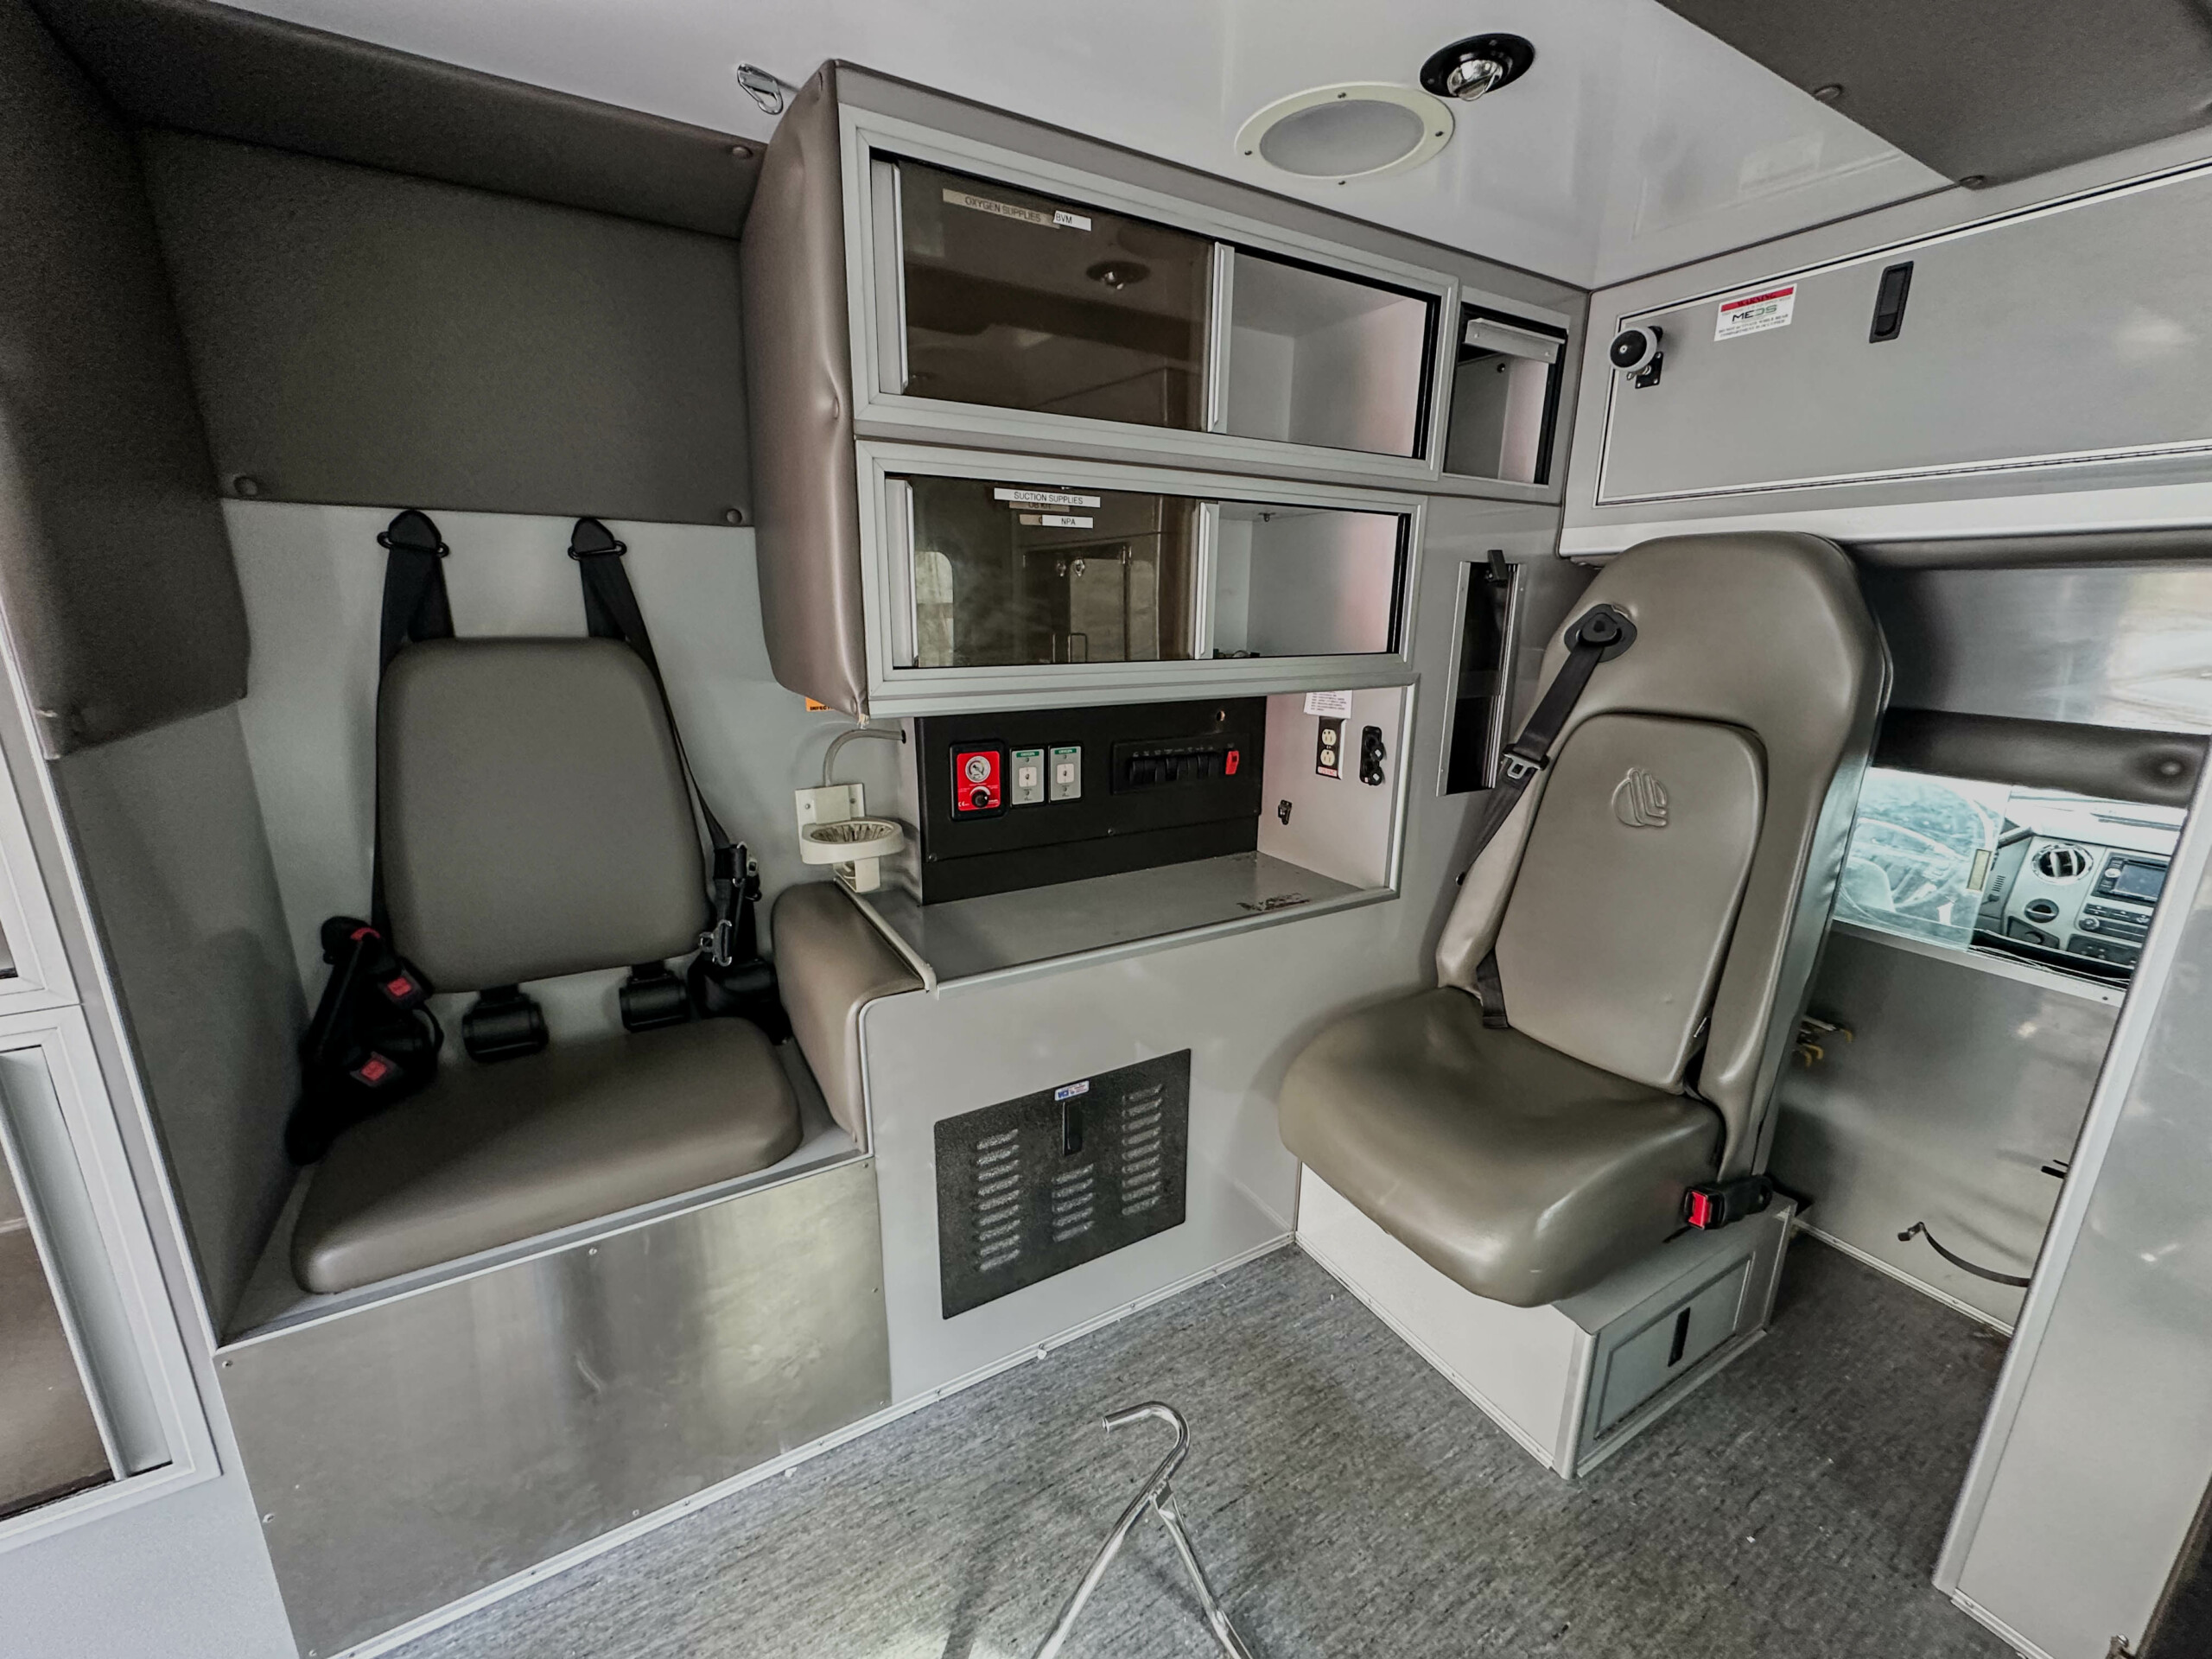 2014 Ford Type 1 AEV Ambulance_9_09676